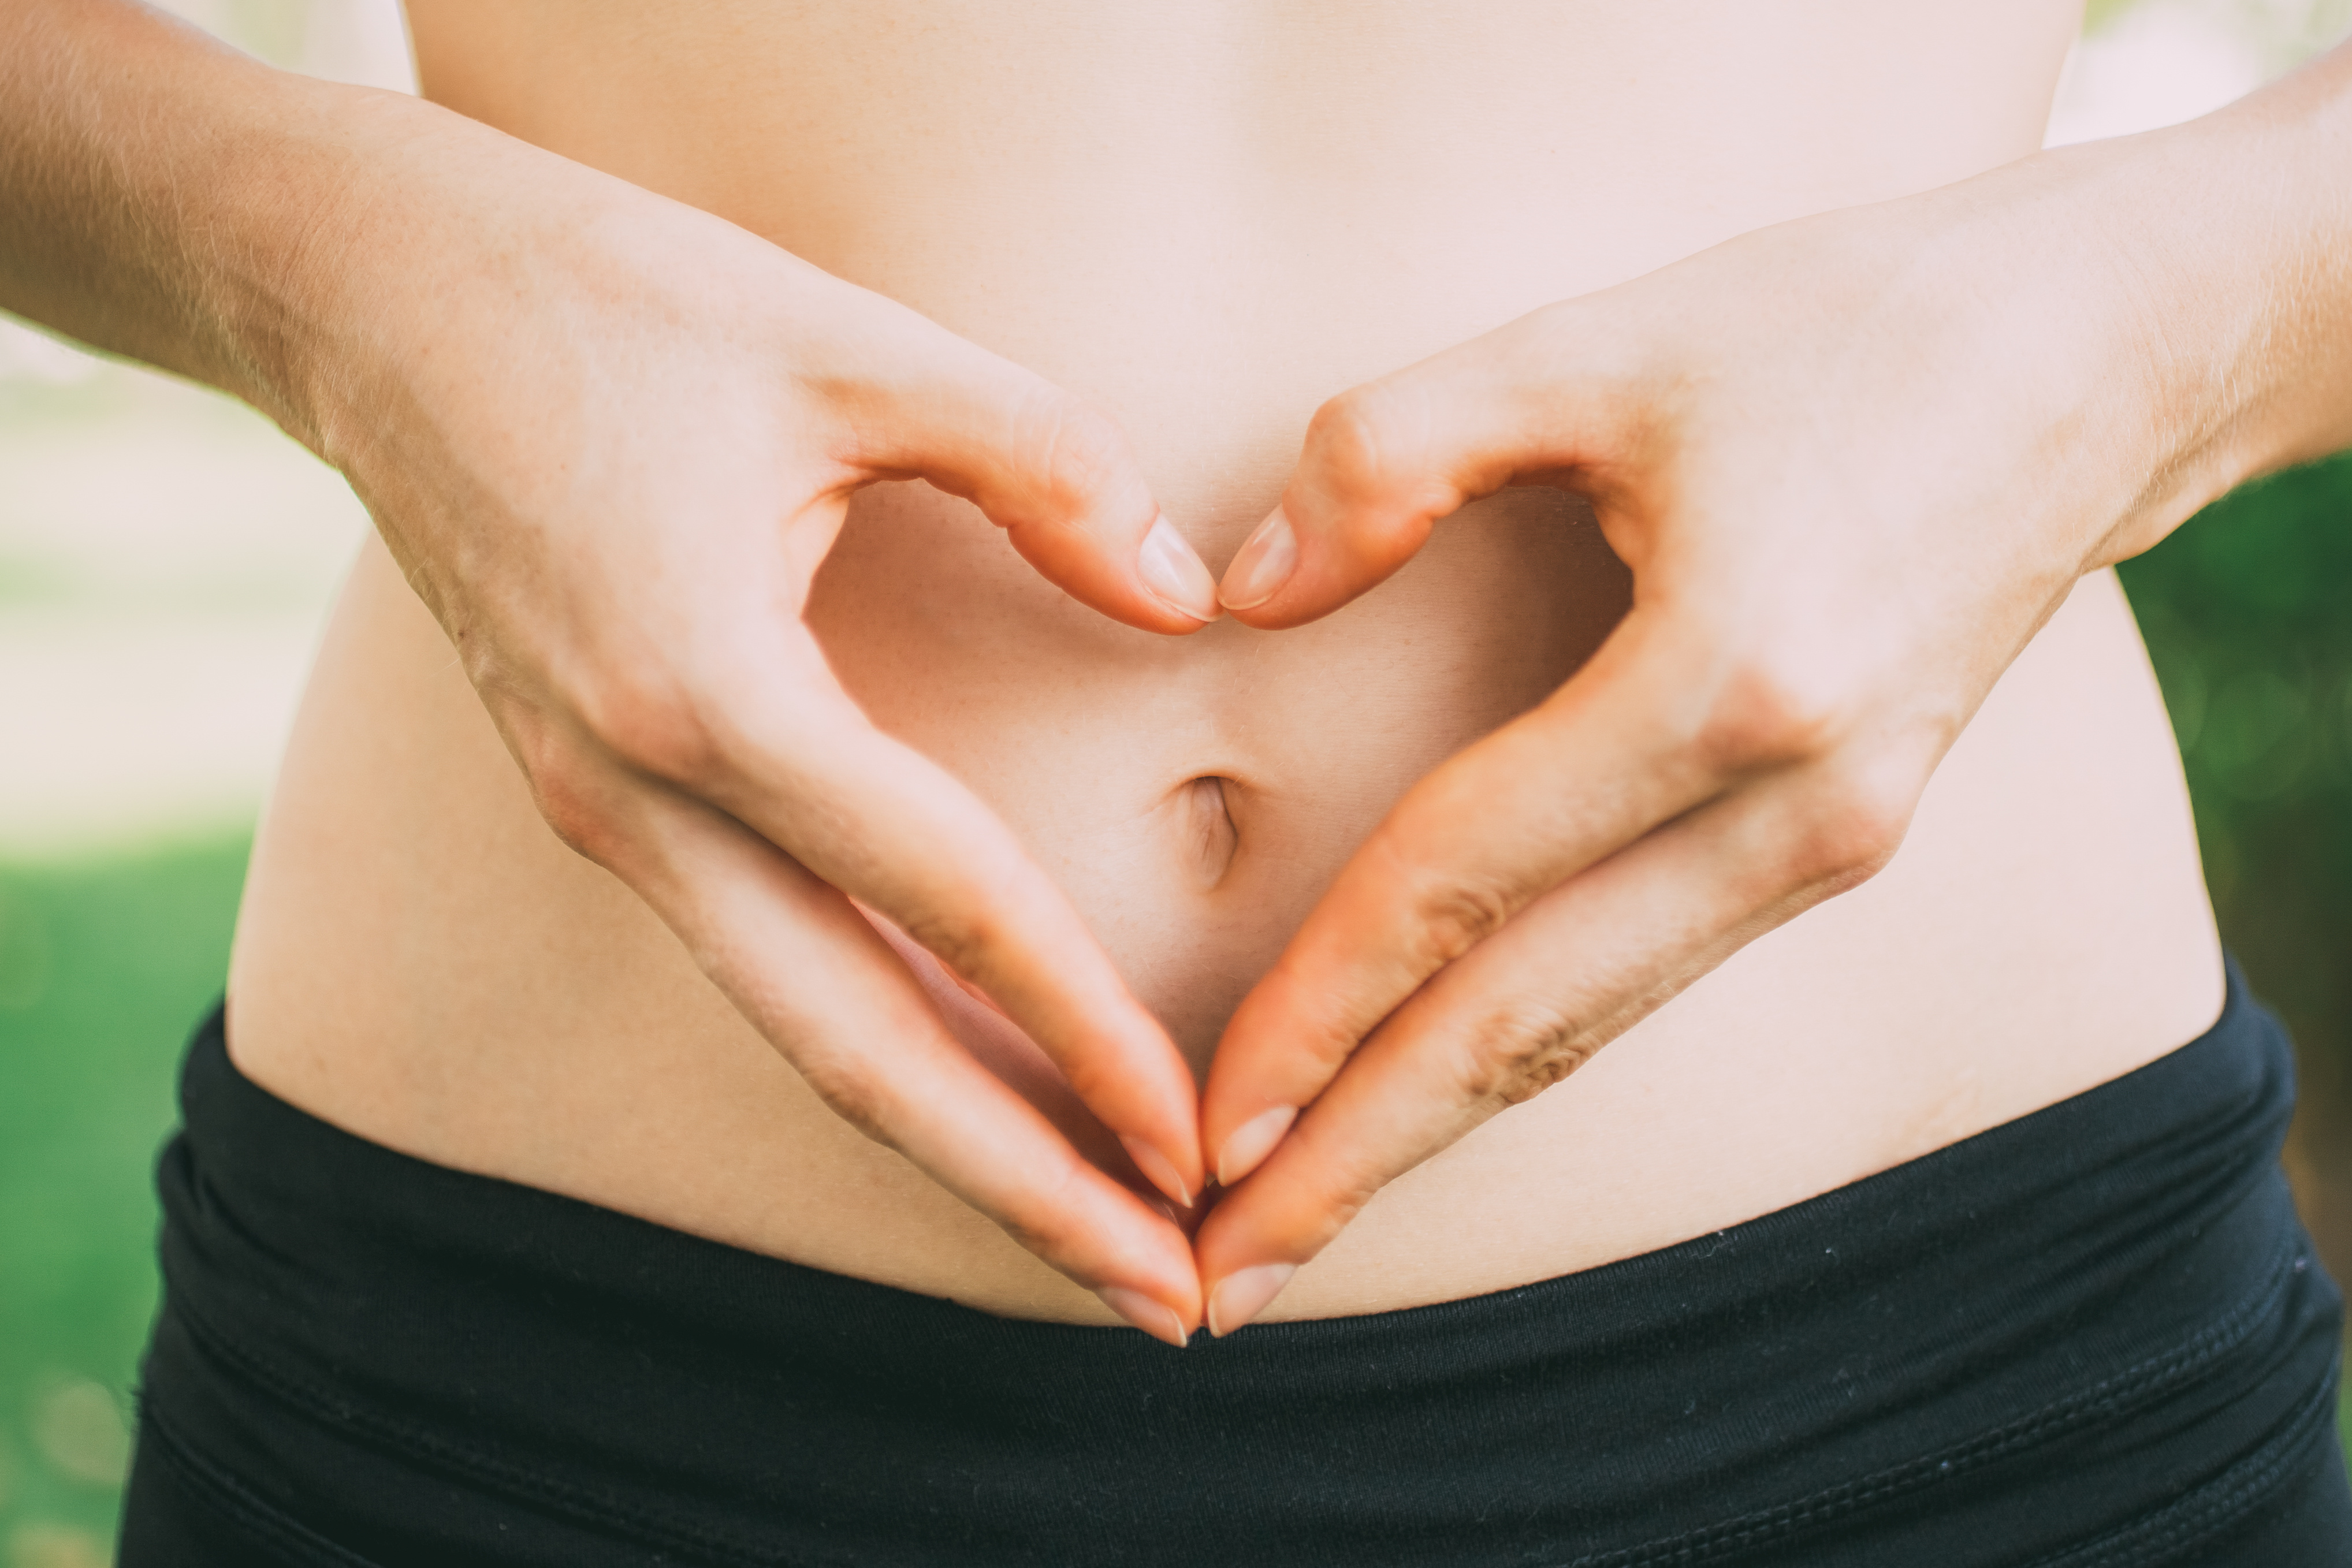 tips for better digestion - digestive health - gut health - gut flora - digestion issues - food and digestion - heal your gut - digestive health issues - IBS